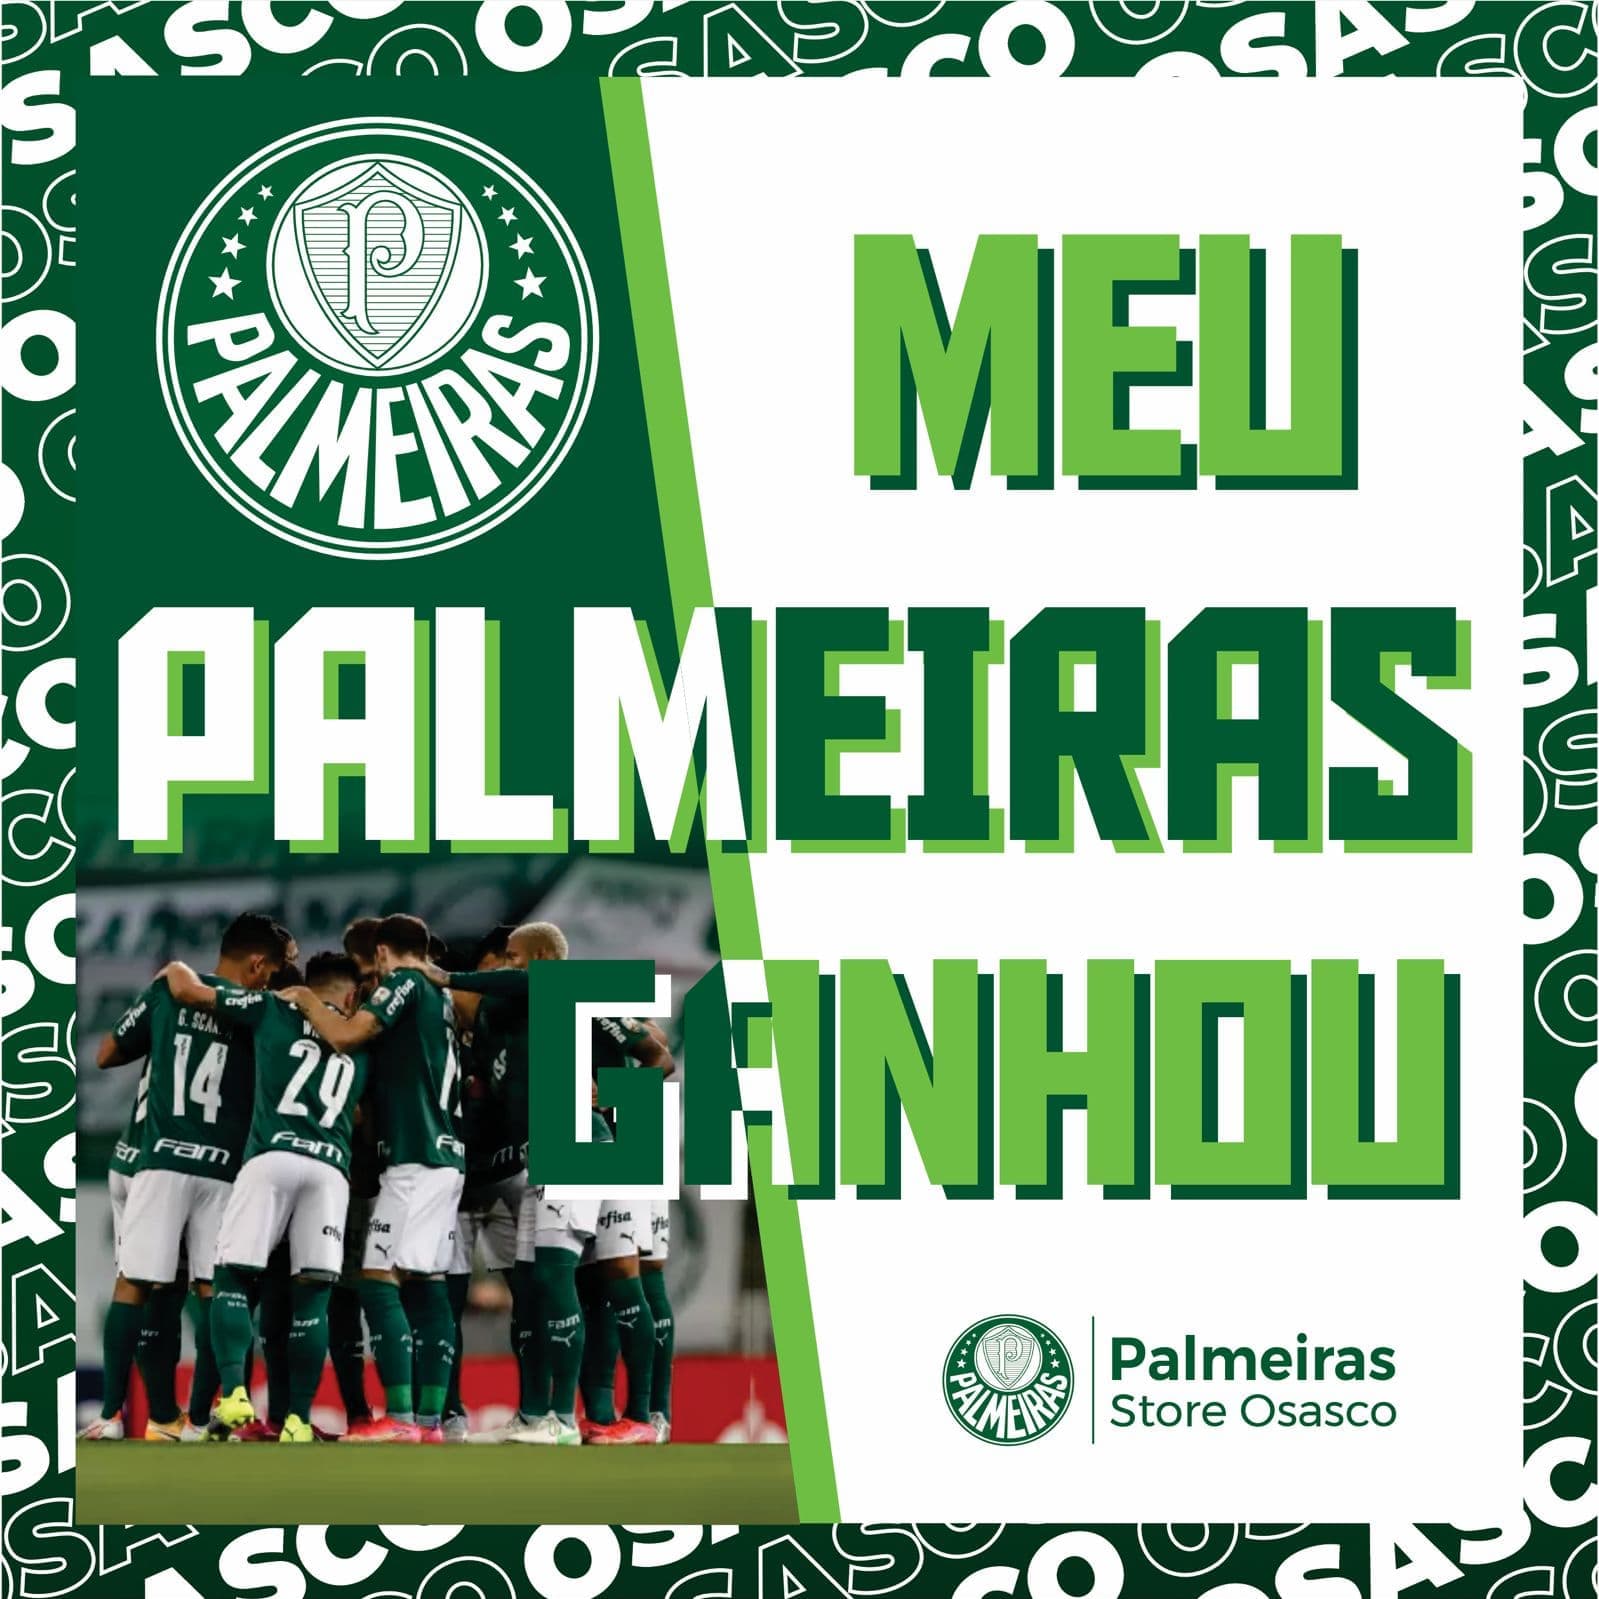 Palmeiras Store